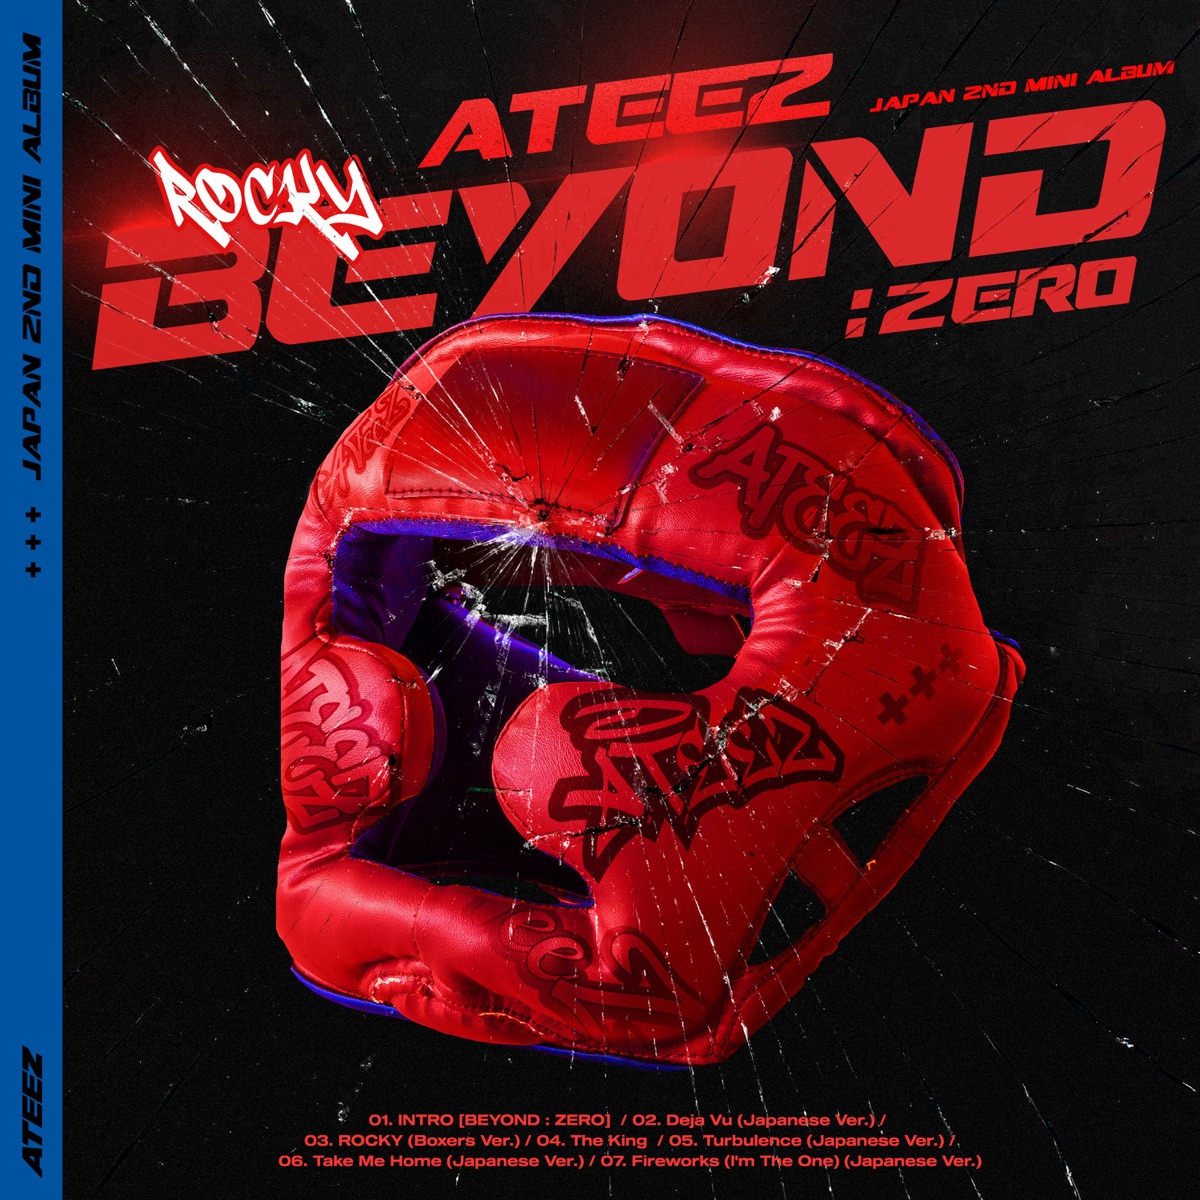 『ATEEZ - Deja Vu (Japanese Ver.) 歌詞』収録の『BEYOND : ZERO』ジャケット